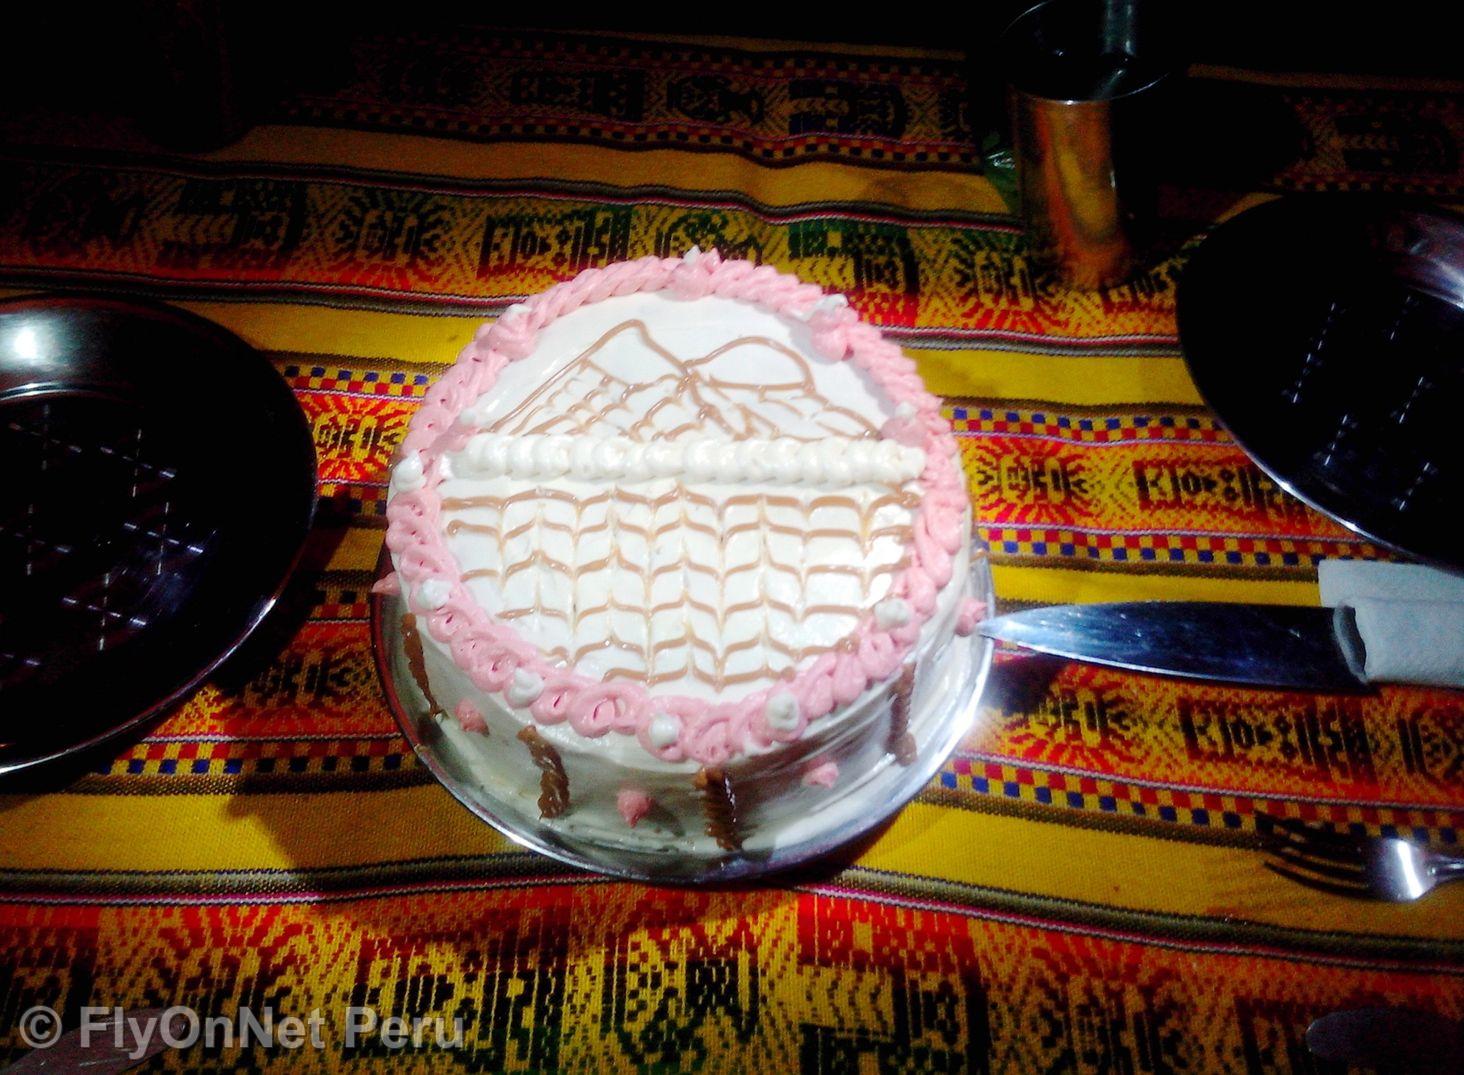 Álbum de fotos: Birthday cake during the trek